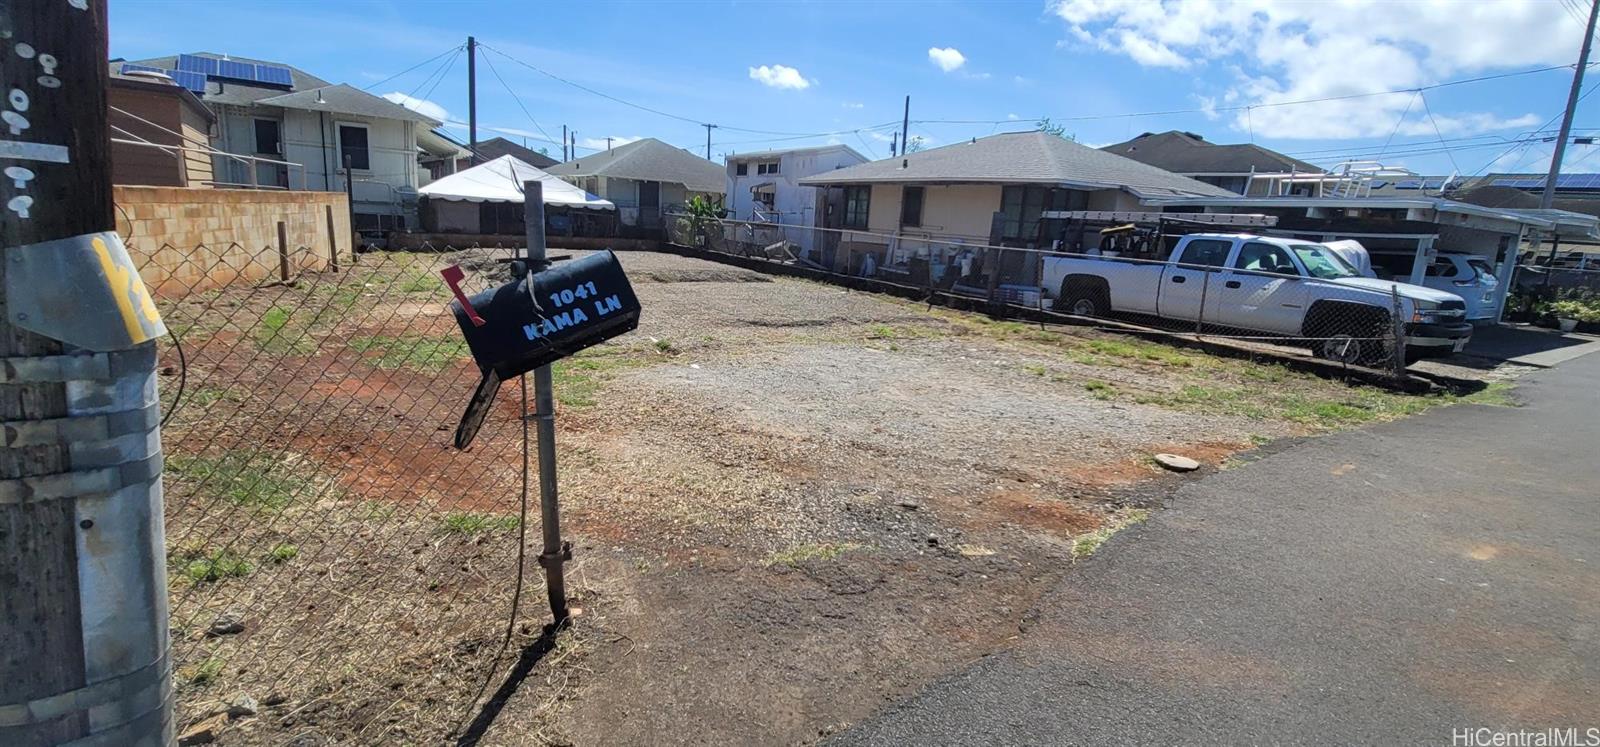 1041 Kama Lane  Honolulu, Hi vacant land for sale - photo 6 of 8